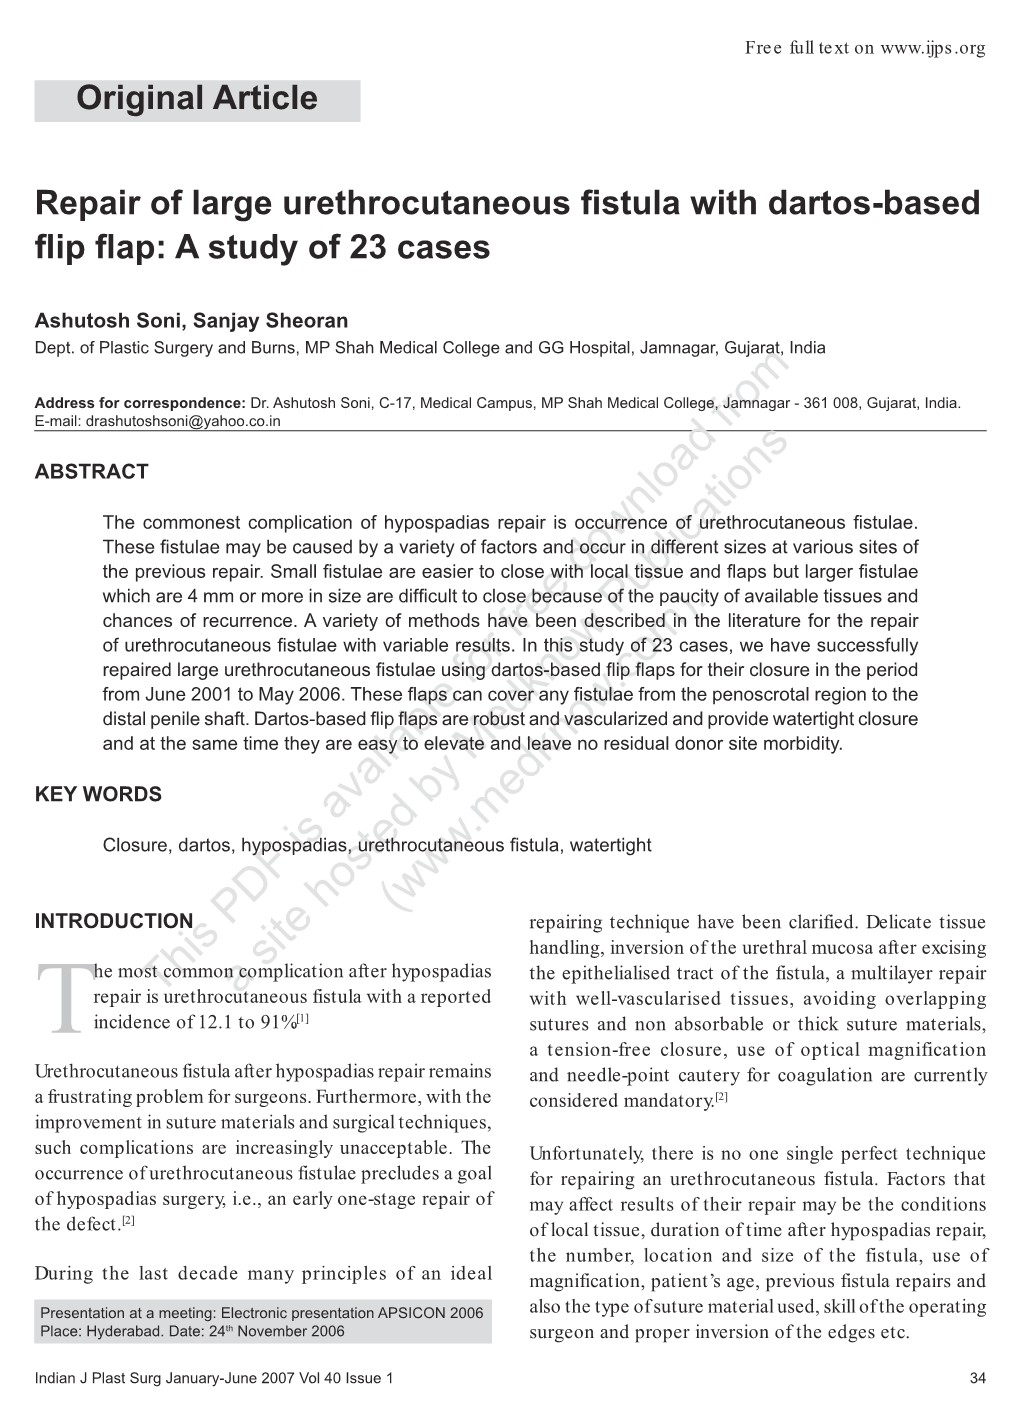 Repair of Large Urethrocutaneous Fistula with Dartos-Based Flip Flap: A